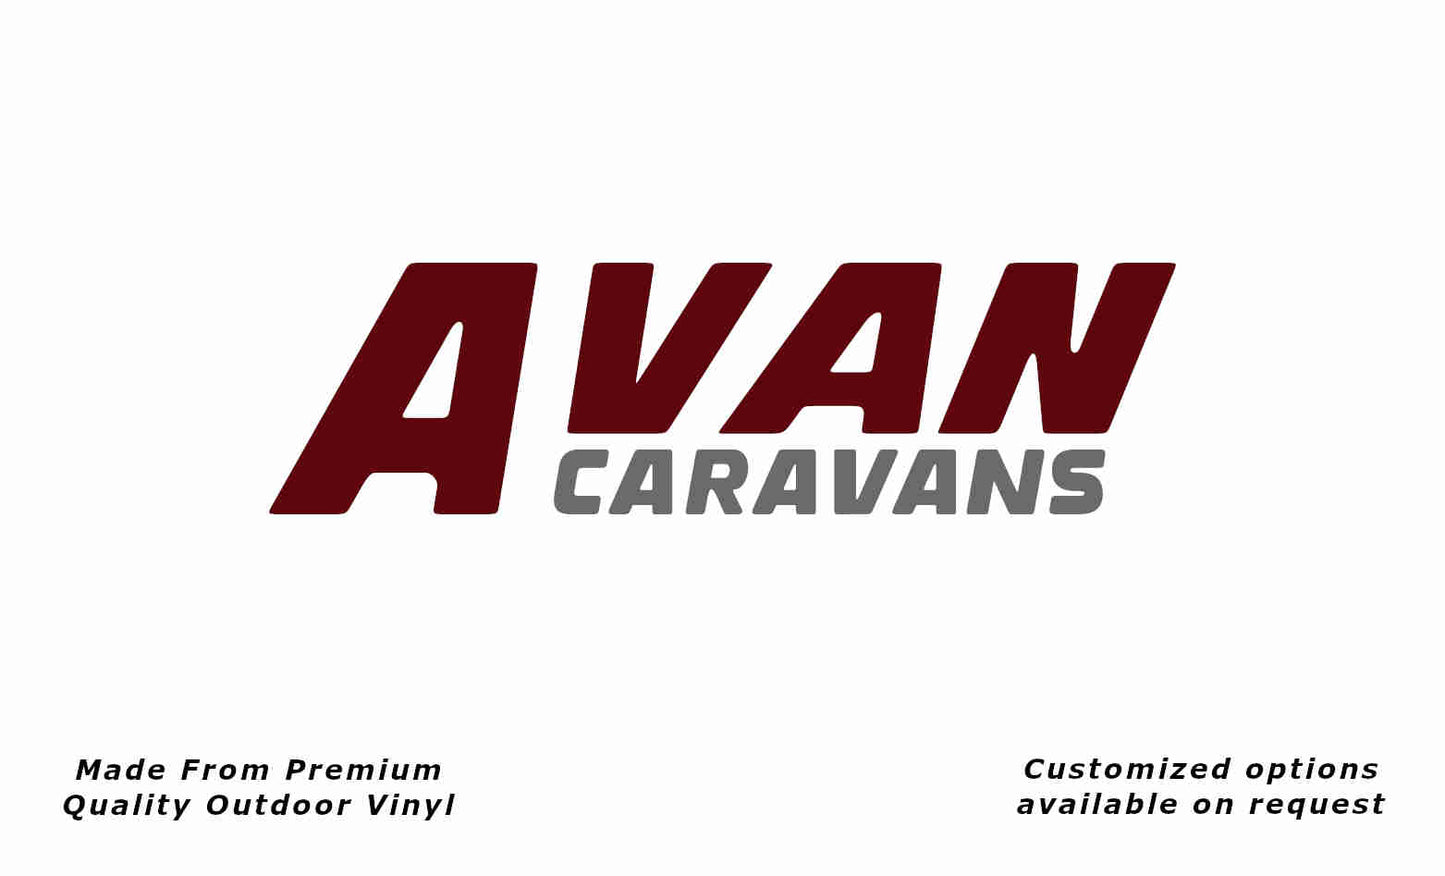 Avan caravans replacement vinyl decal sticker in purple red and silver grey.